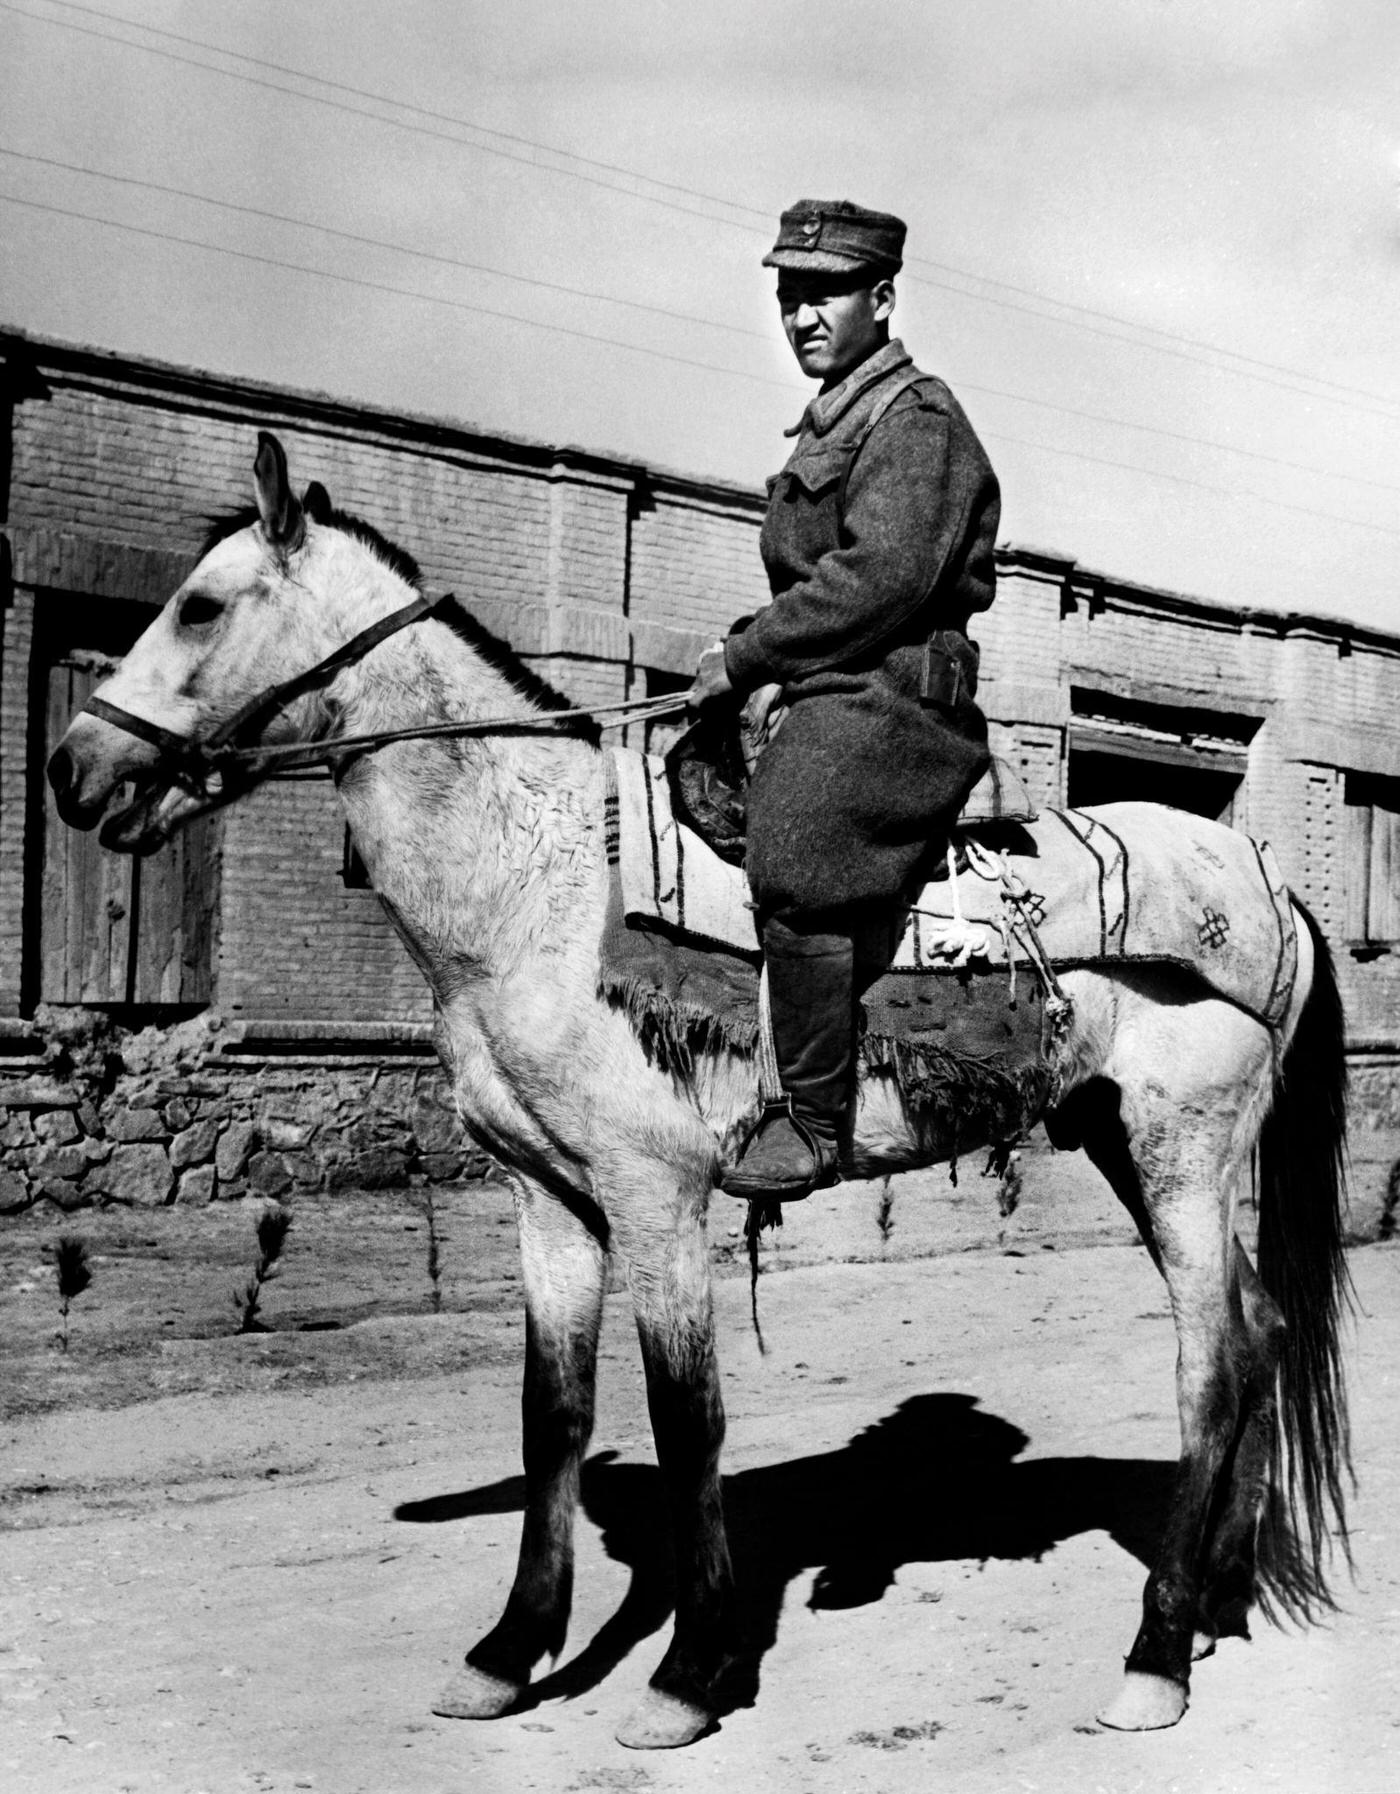 Afghan guard protecting the borders, 1955.